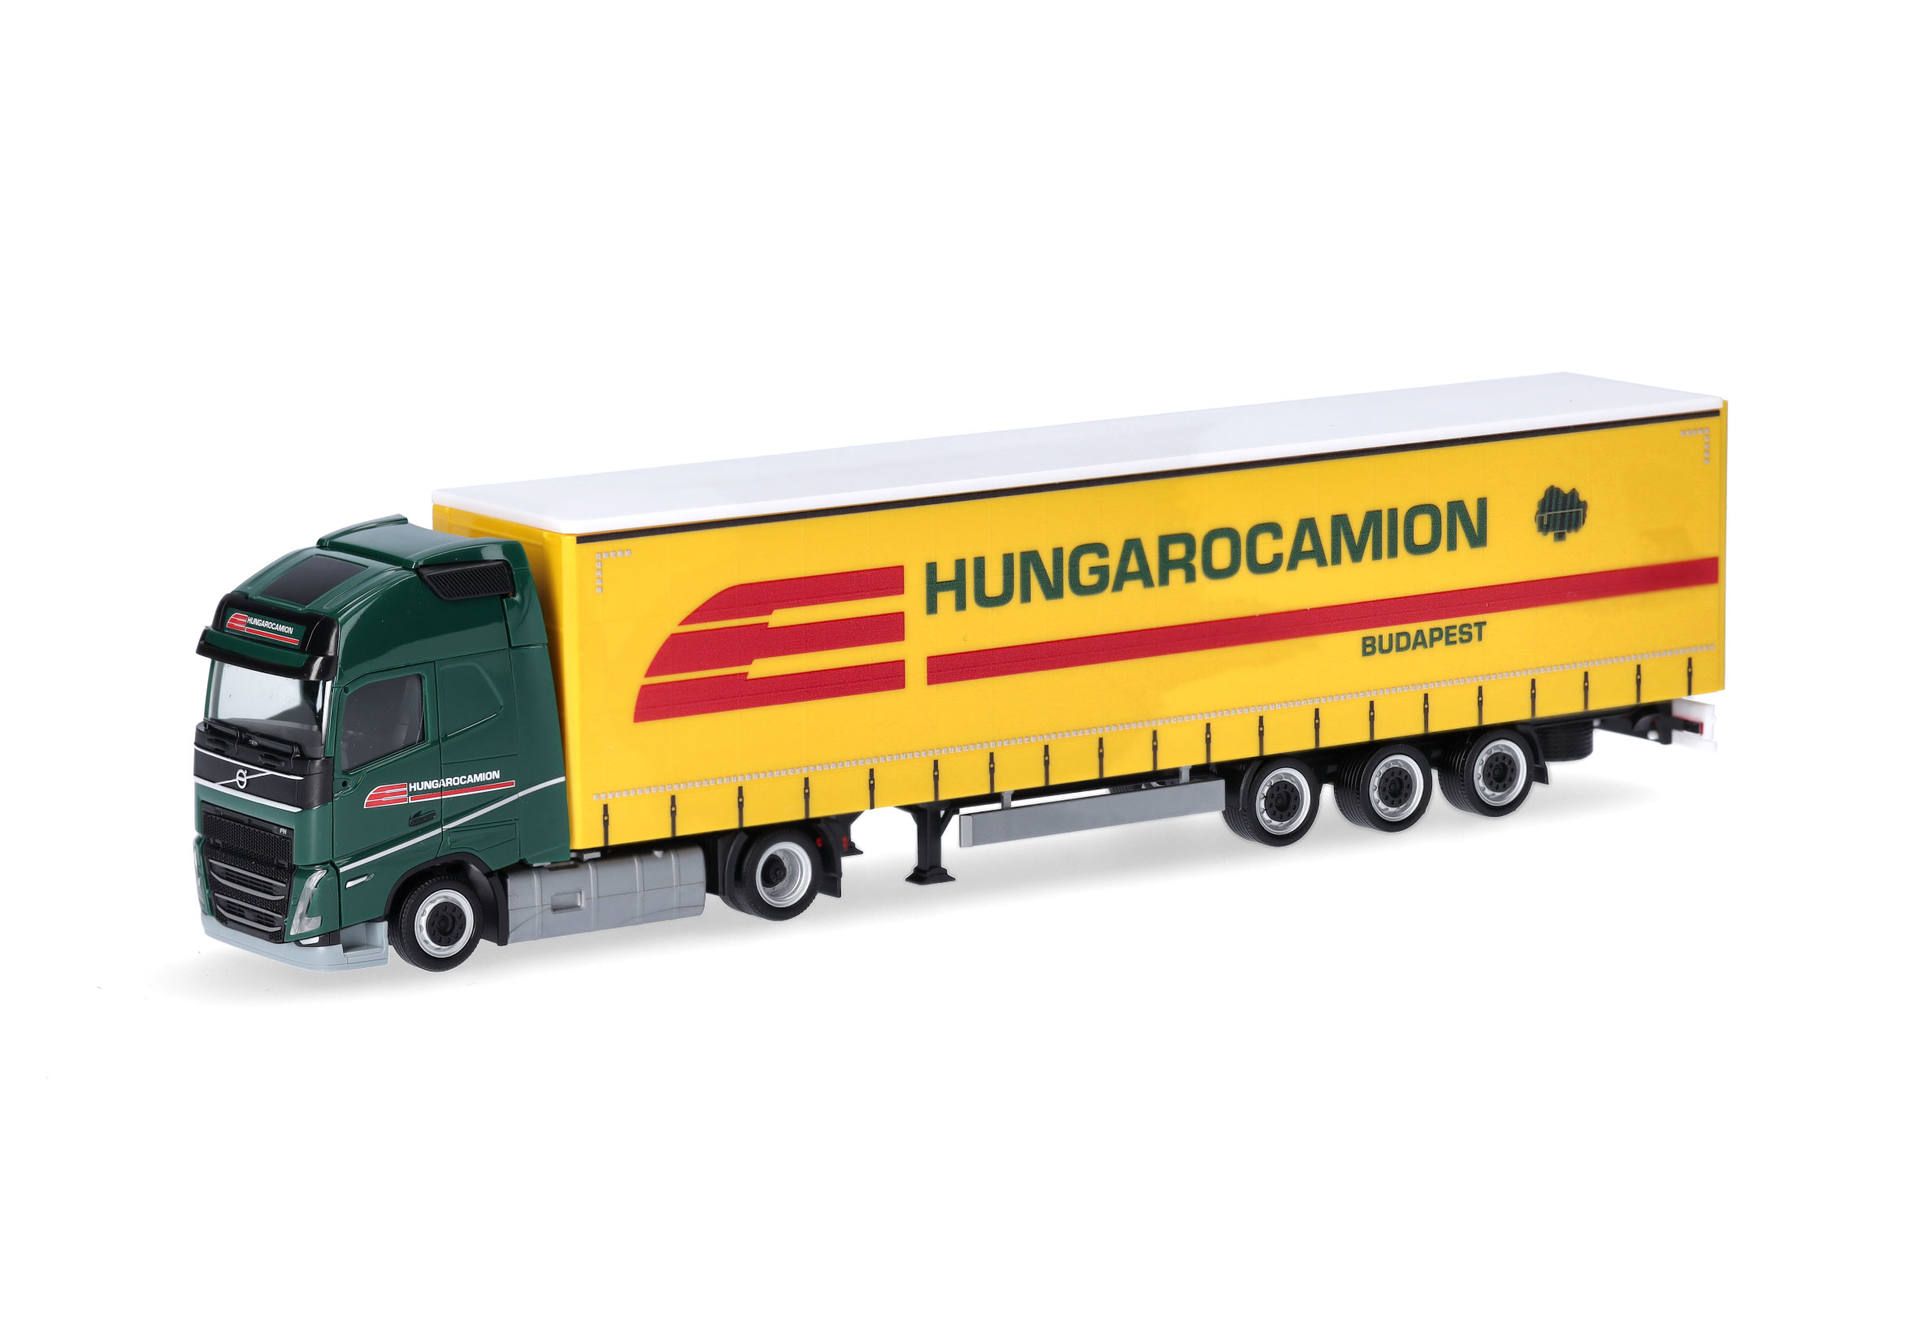 Volvo FH Gl. XL 2020 curtain canvas semitrailer "Hungarocamion" (Hungary / Budapest)